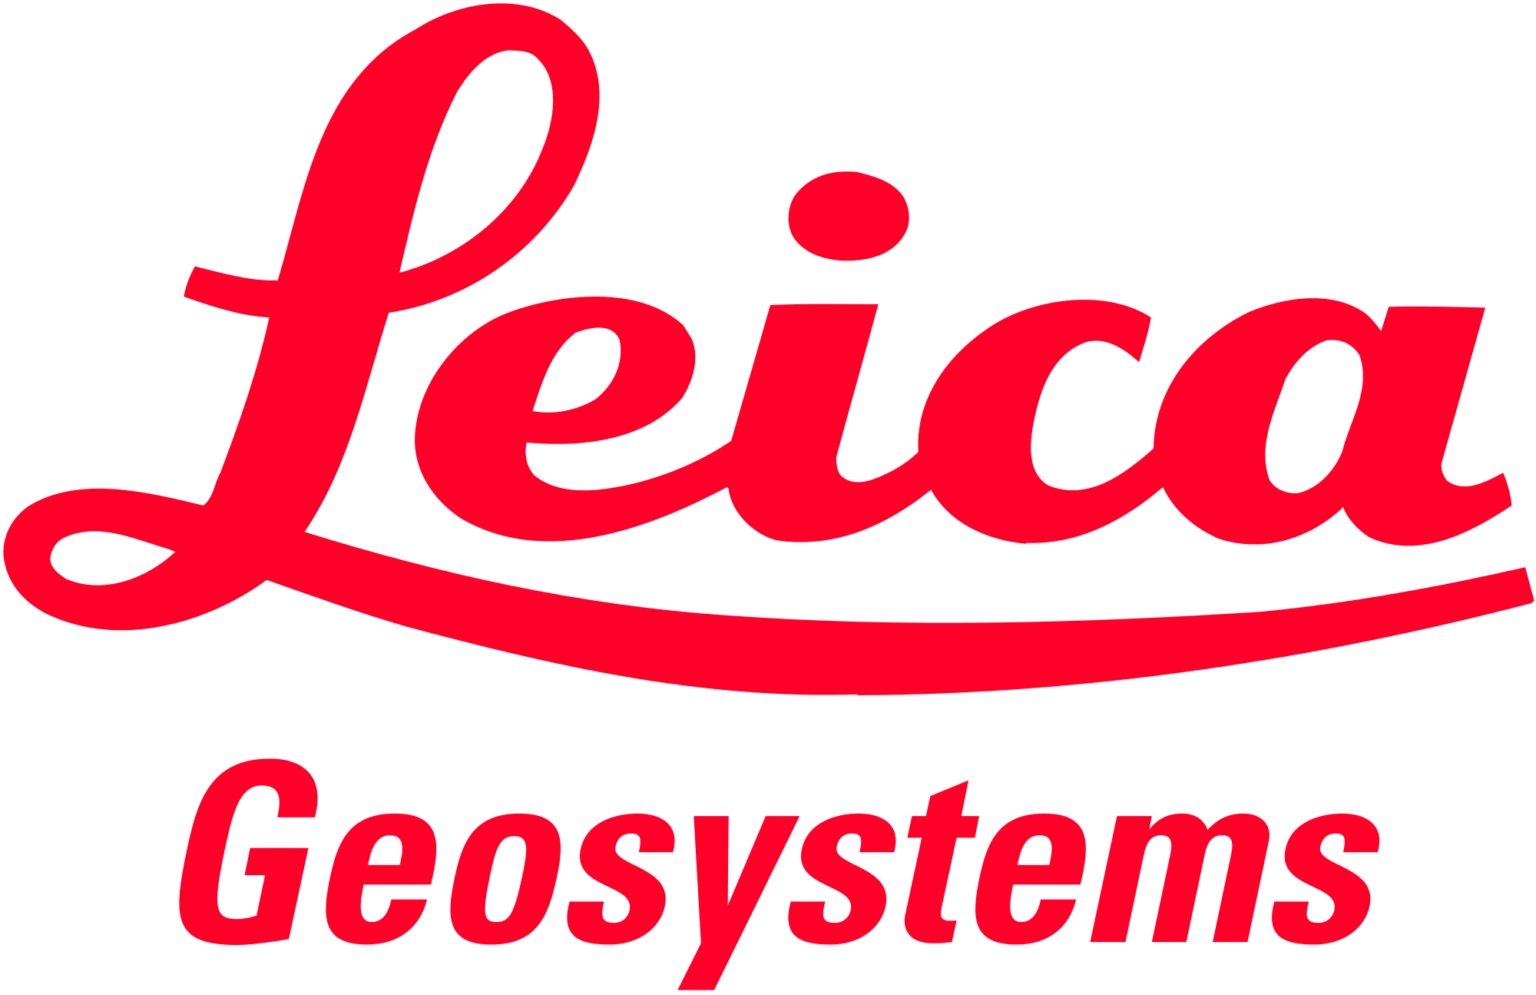 leica-logo-png-open-2000-1536x995